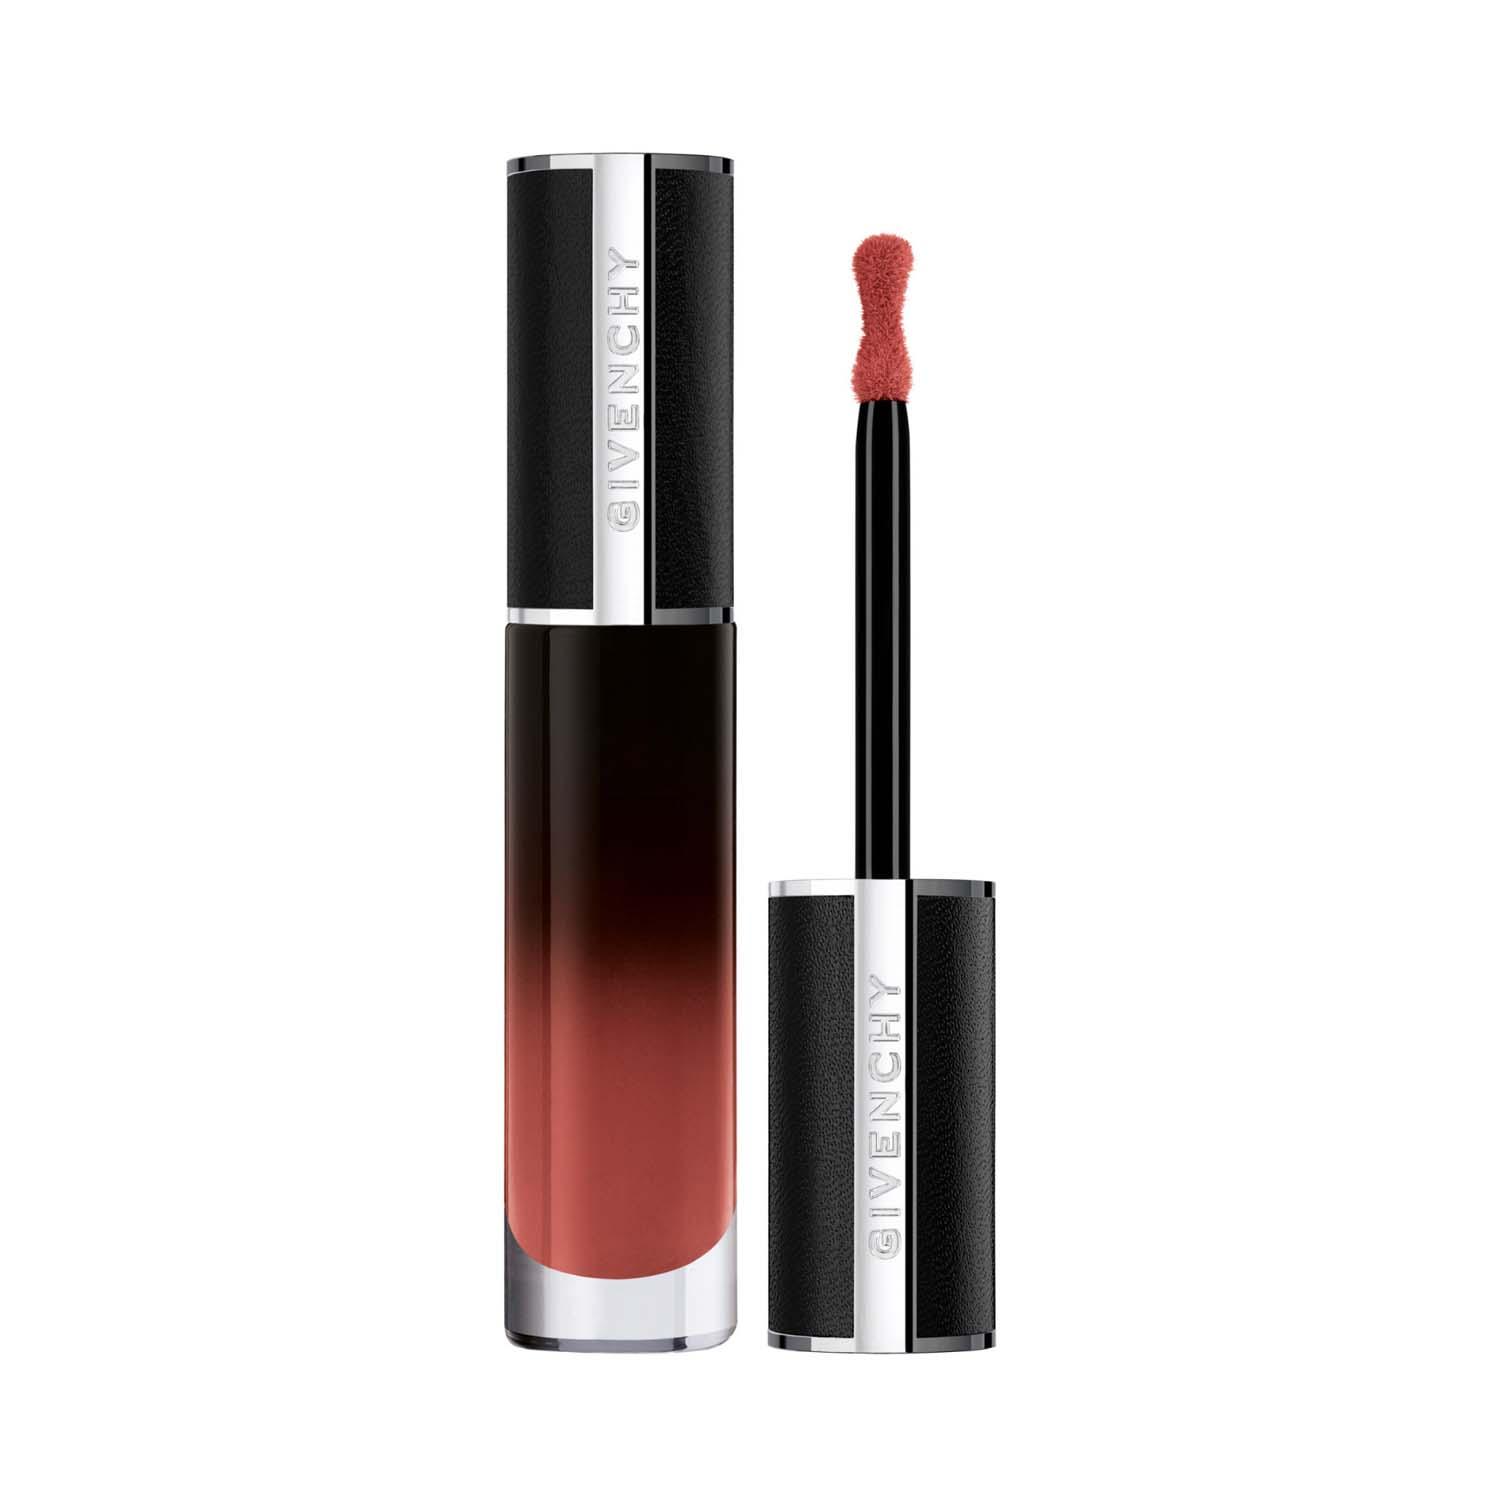 Givenchy | Givenchy Le Rouge Interdit Cream Velvet Liquid Lipstick - N53 Brun Delicat (6.5 ml)